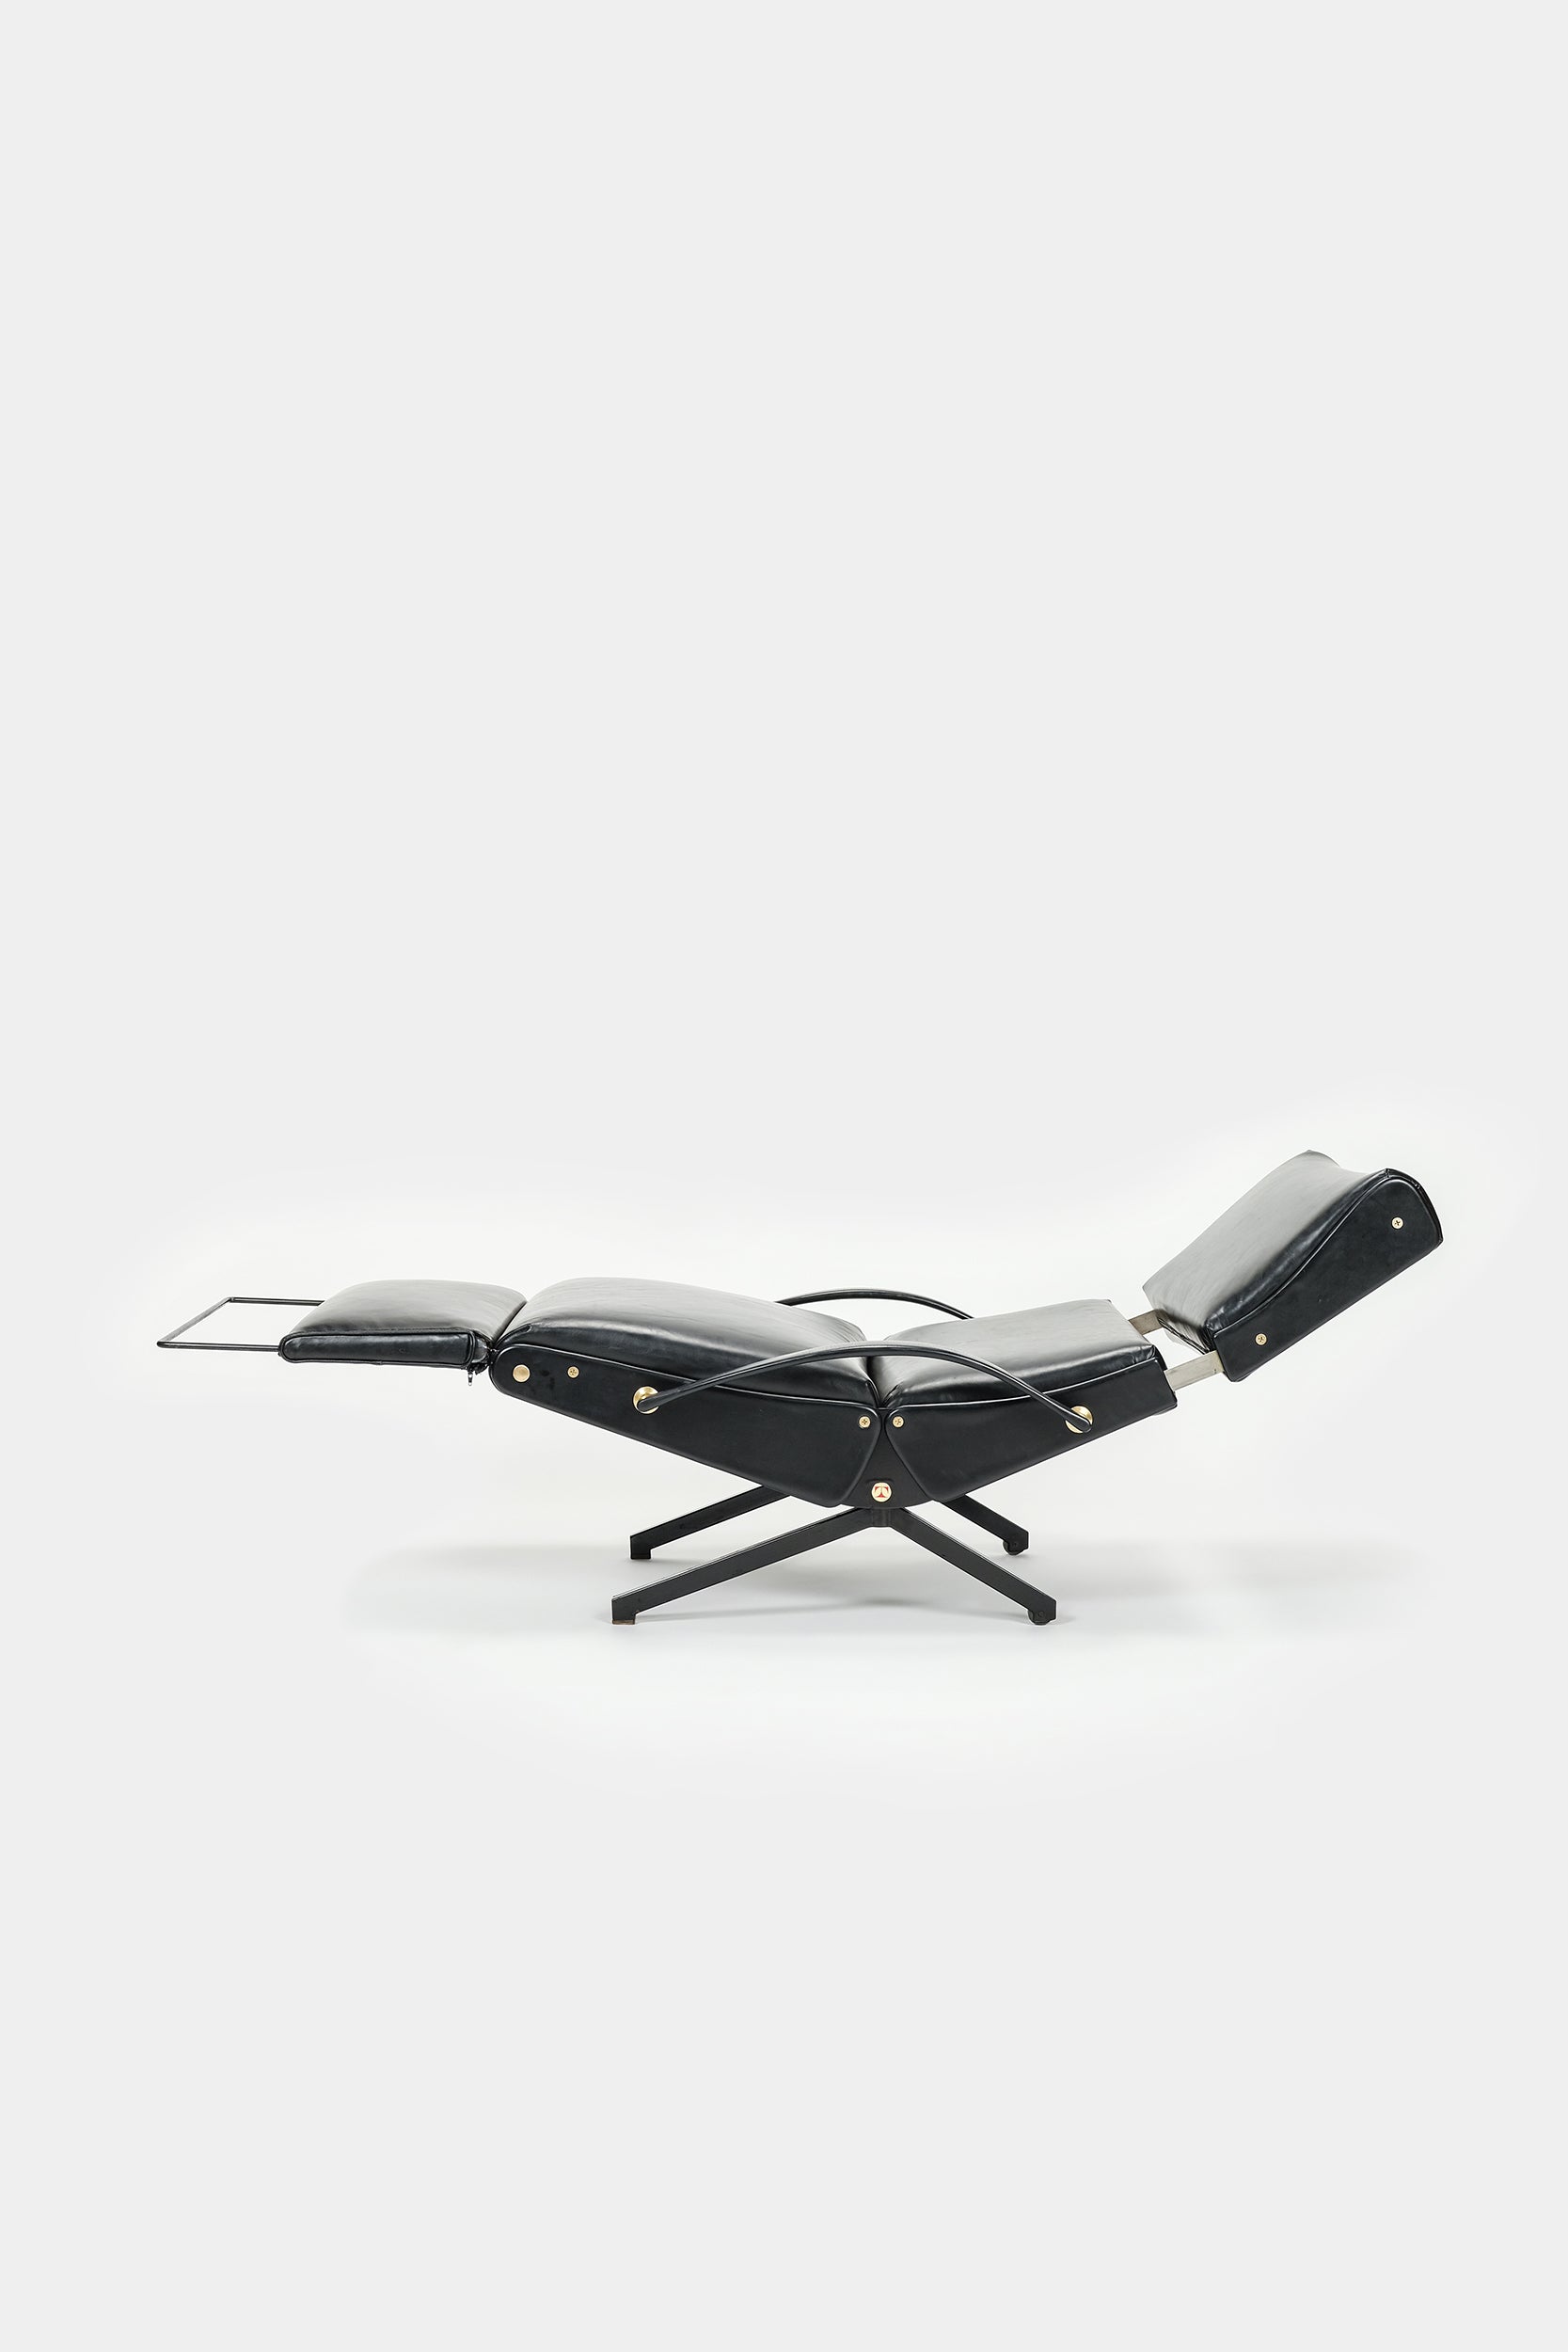 Osvaldo Borsani Lounge Chair P40, Tecno, 50er